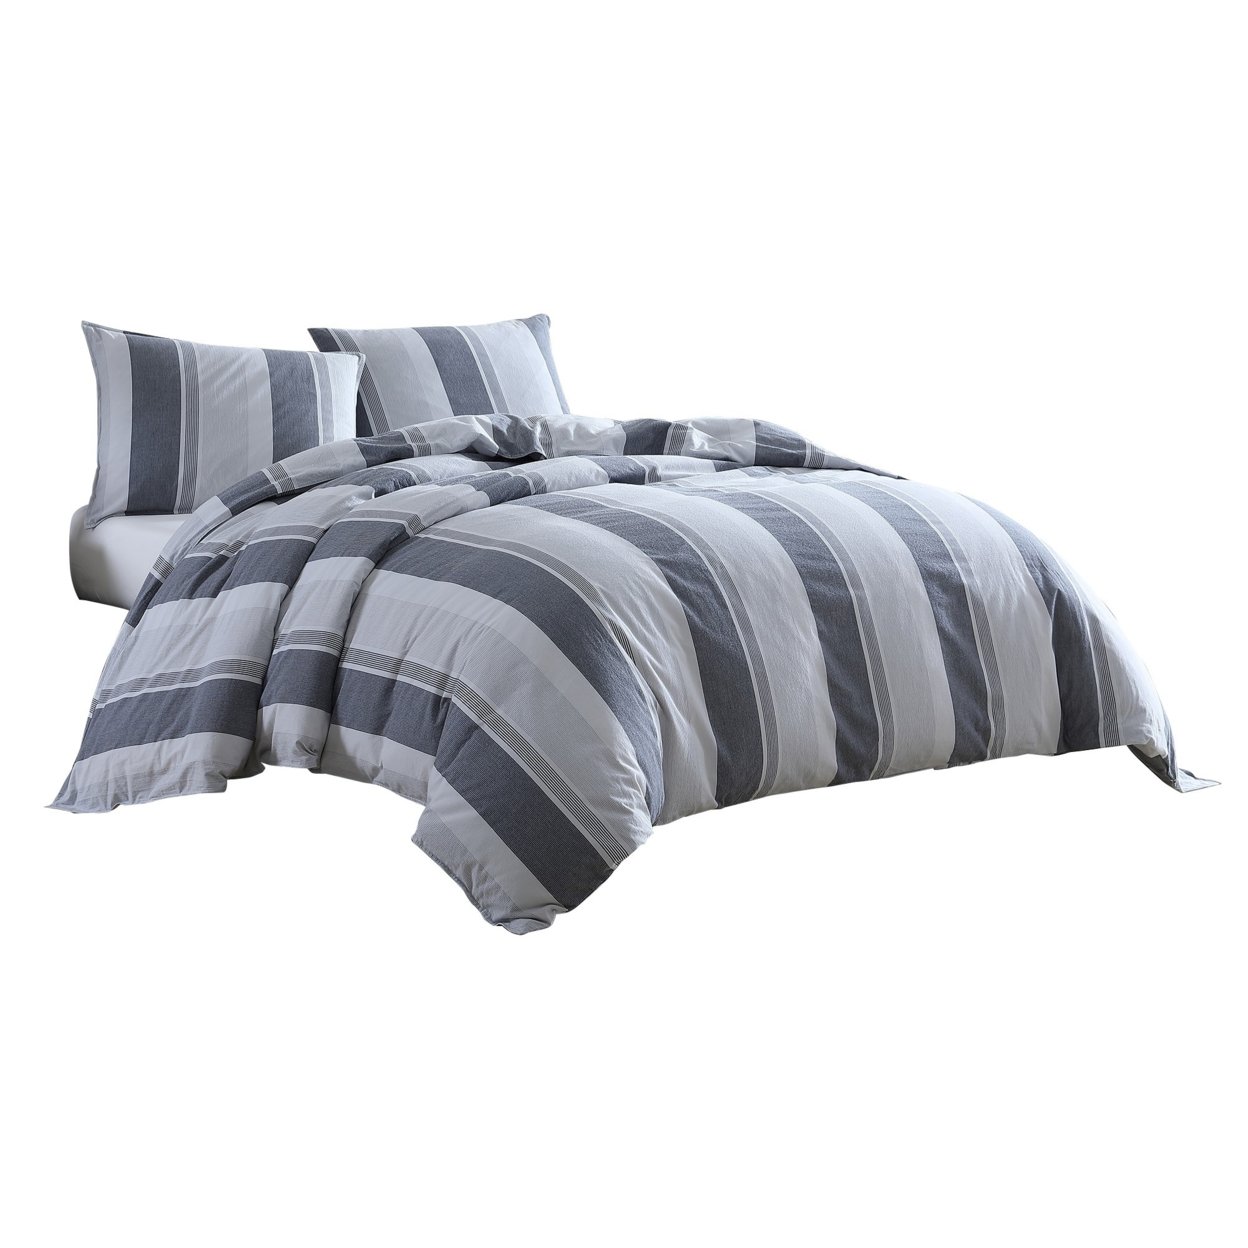 3 Piece King Comforter Set With Broad Stripes, Gray- Saltoro Sherpi